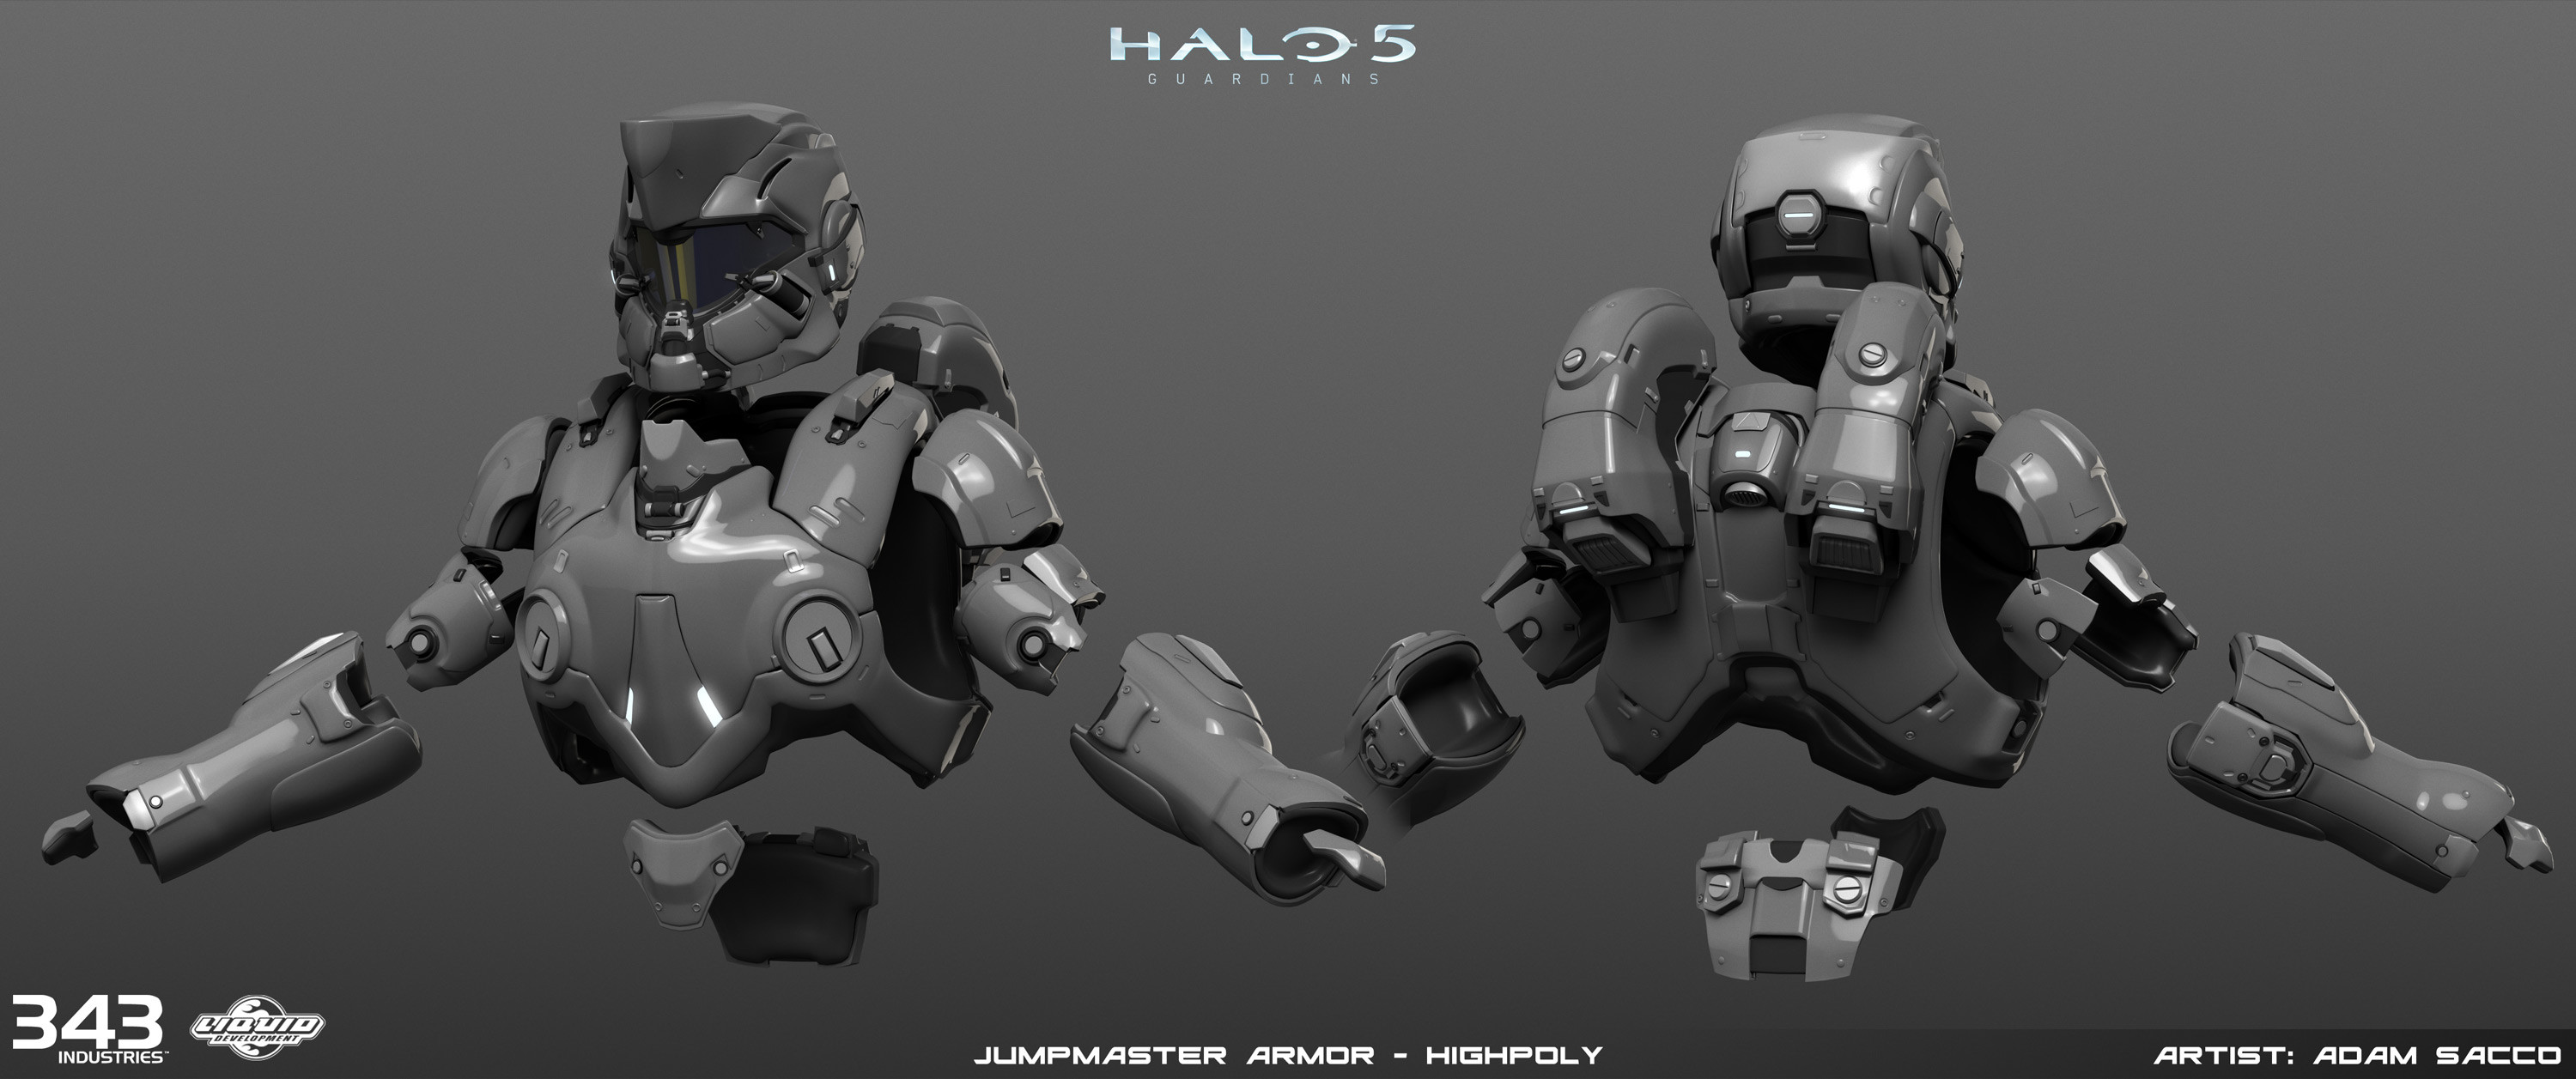 Halo 5 - Jumpmaster armor - high poly